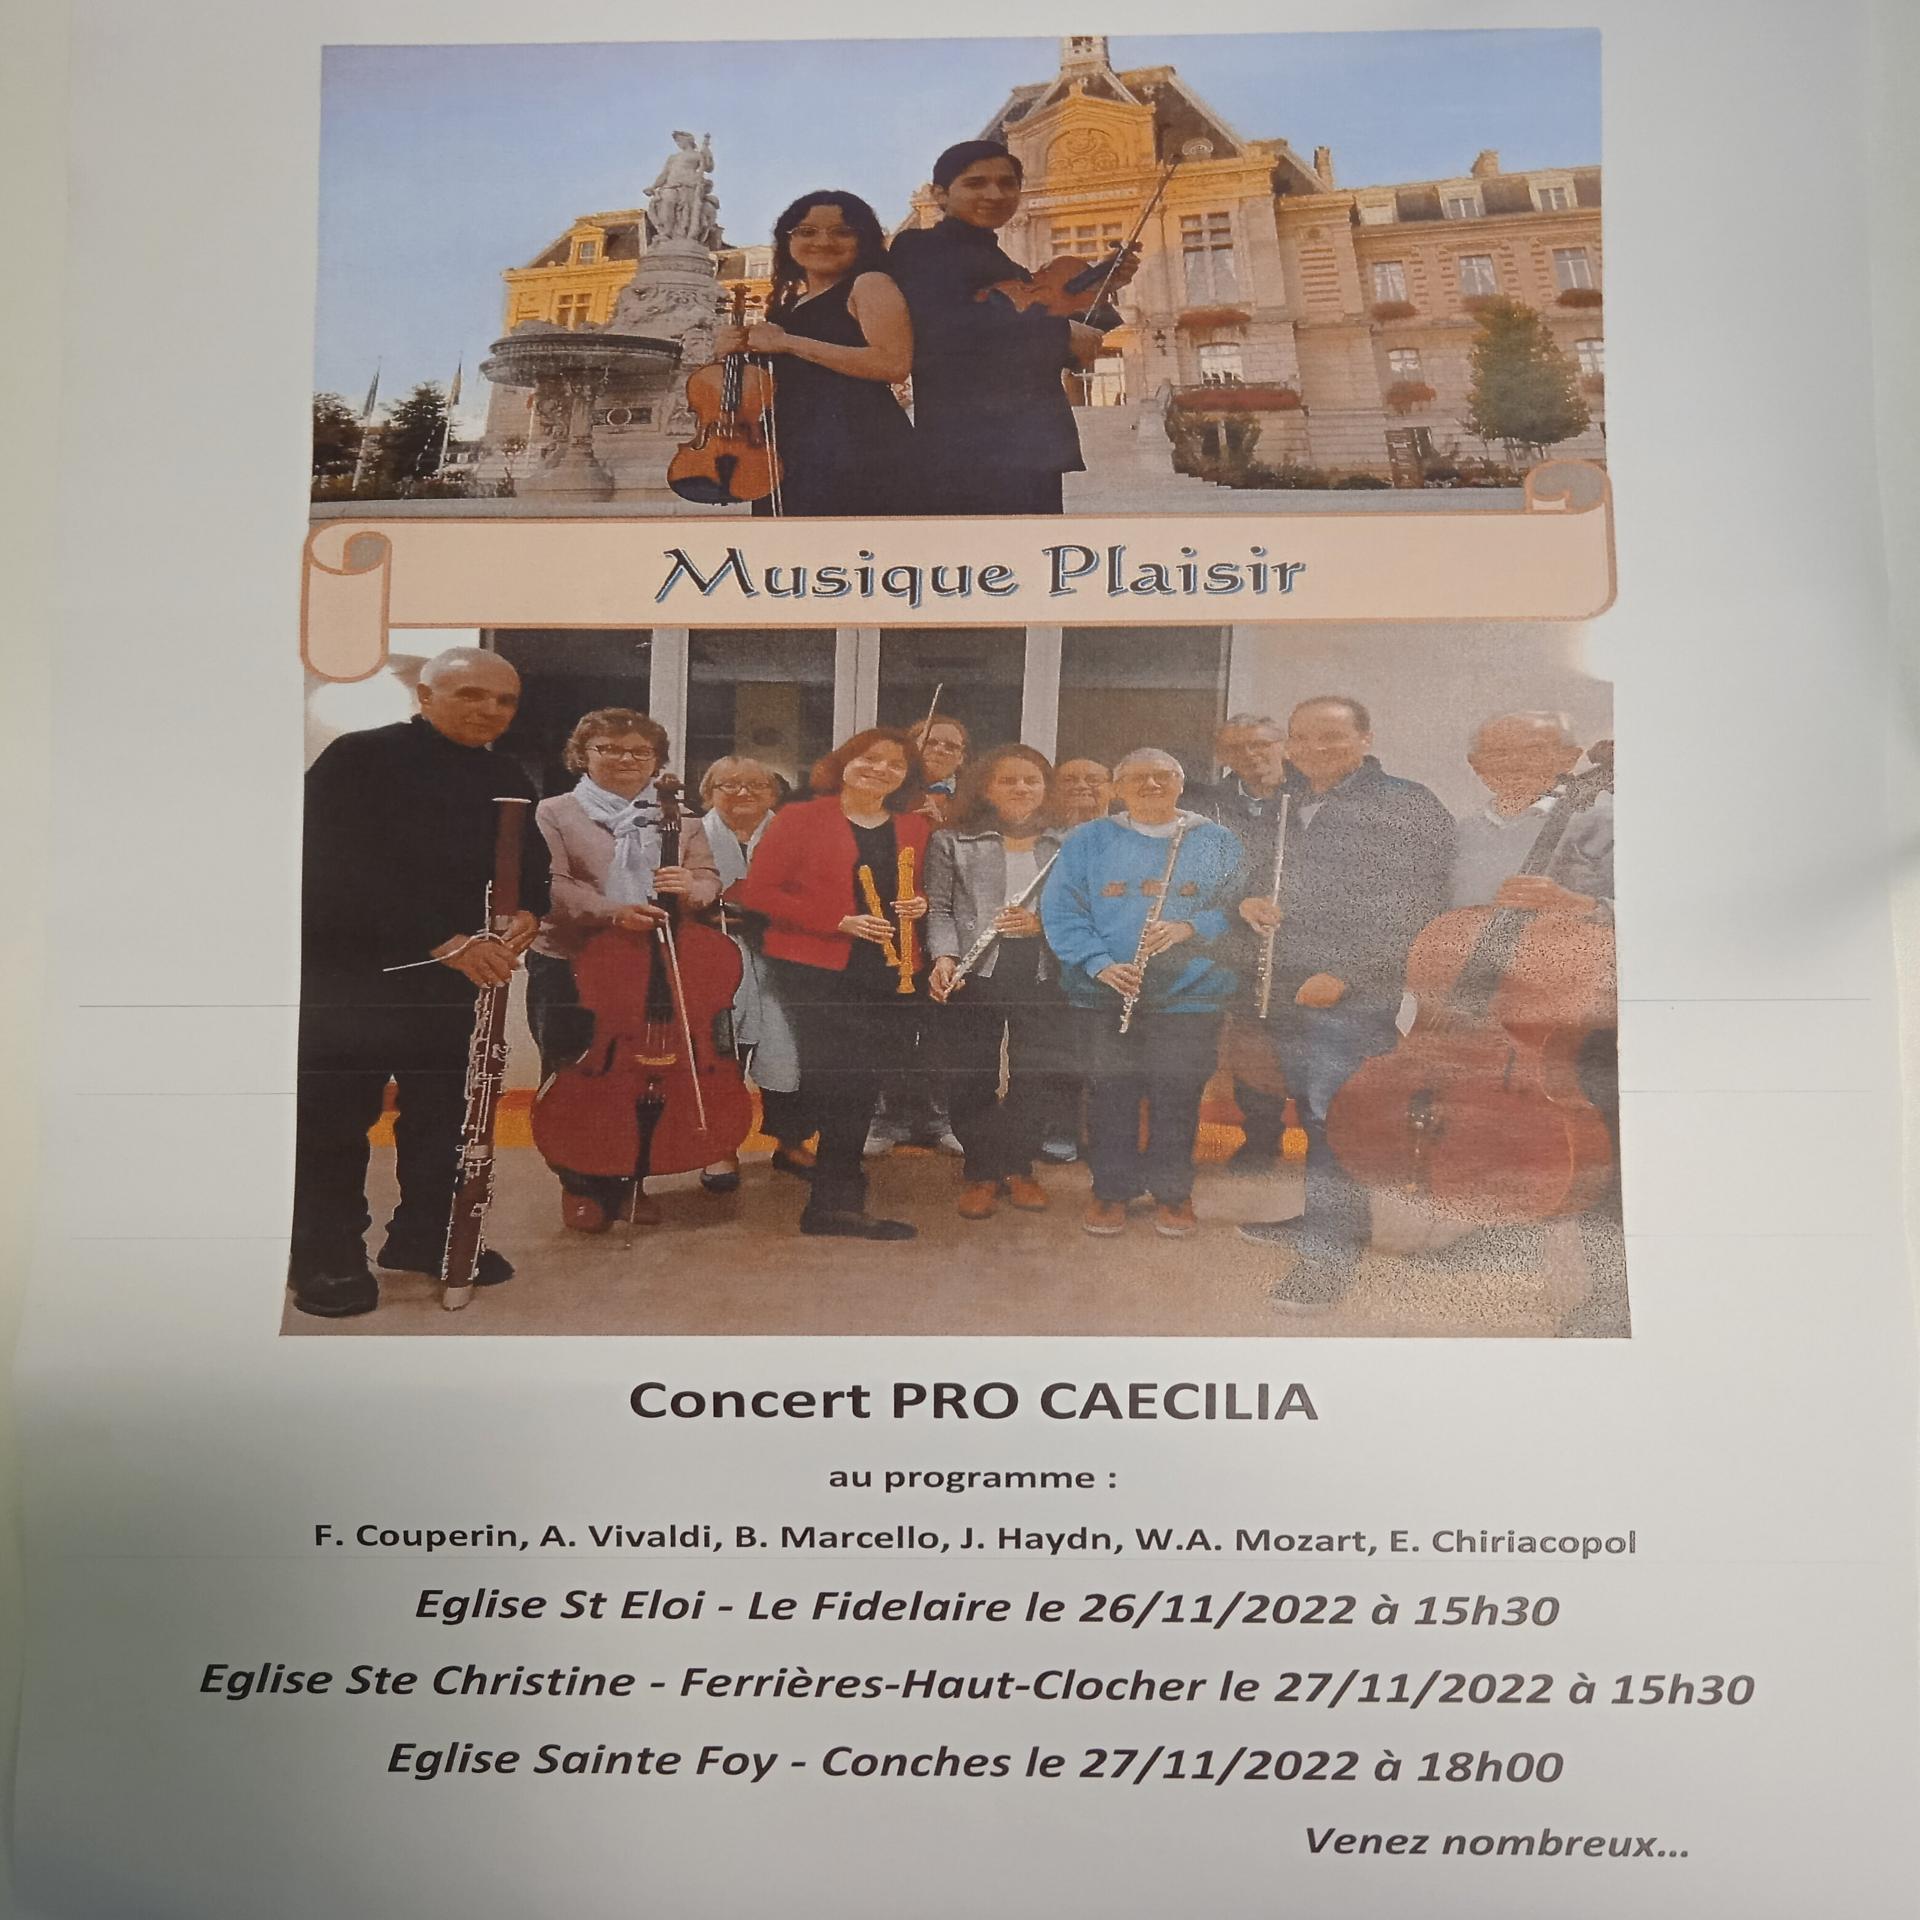 Concert PRO CAECILIA